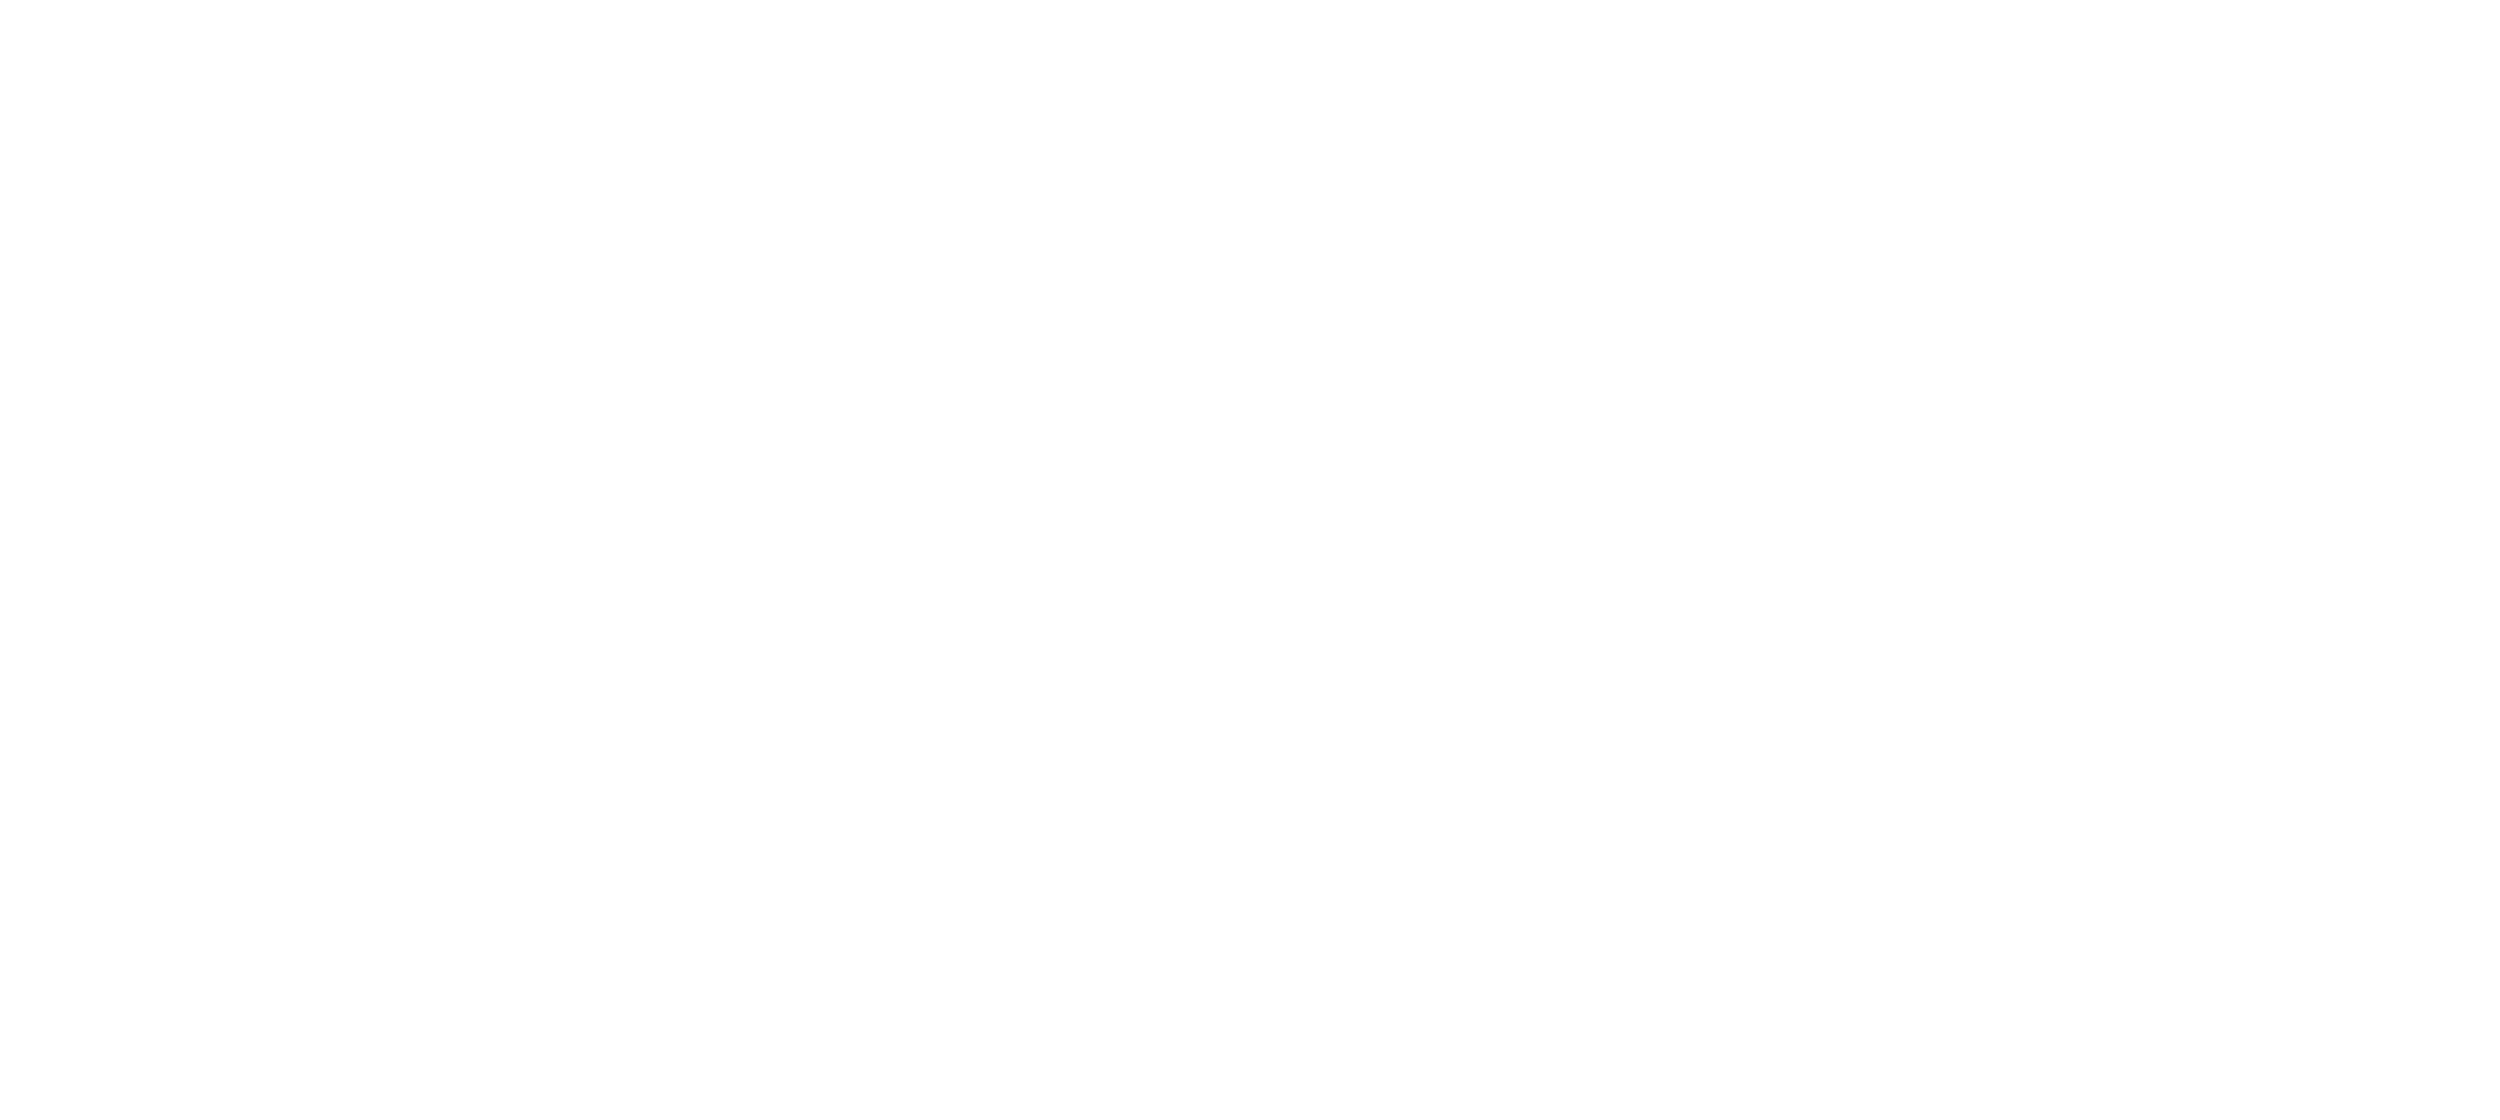 FORGE VFX School